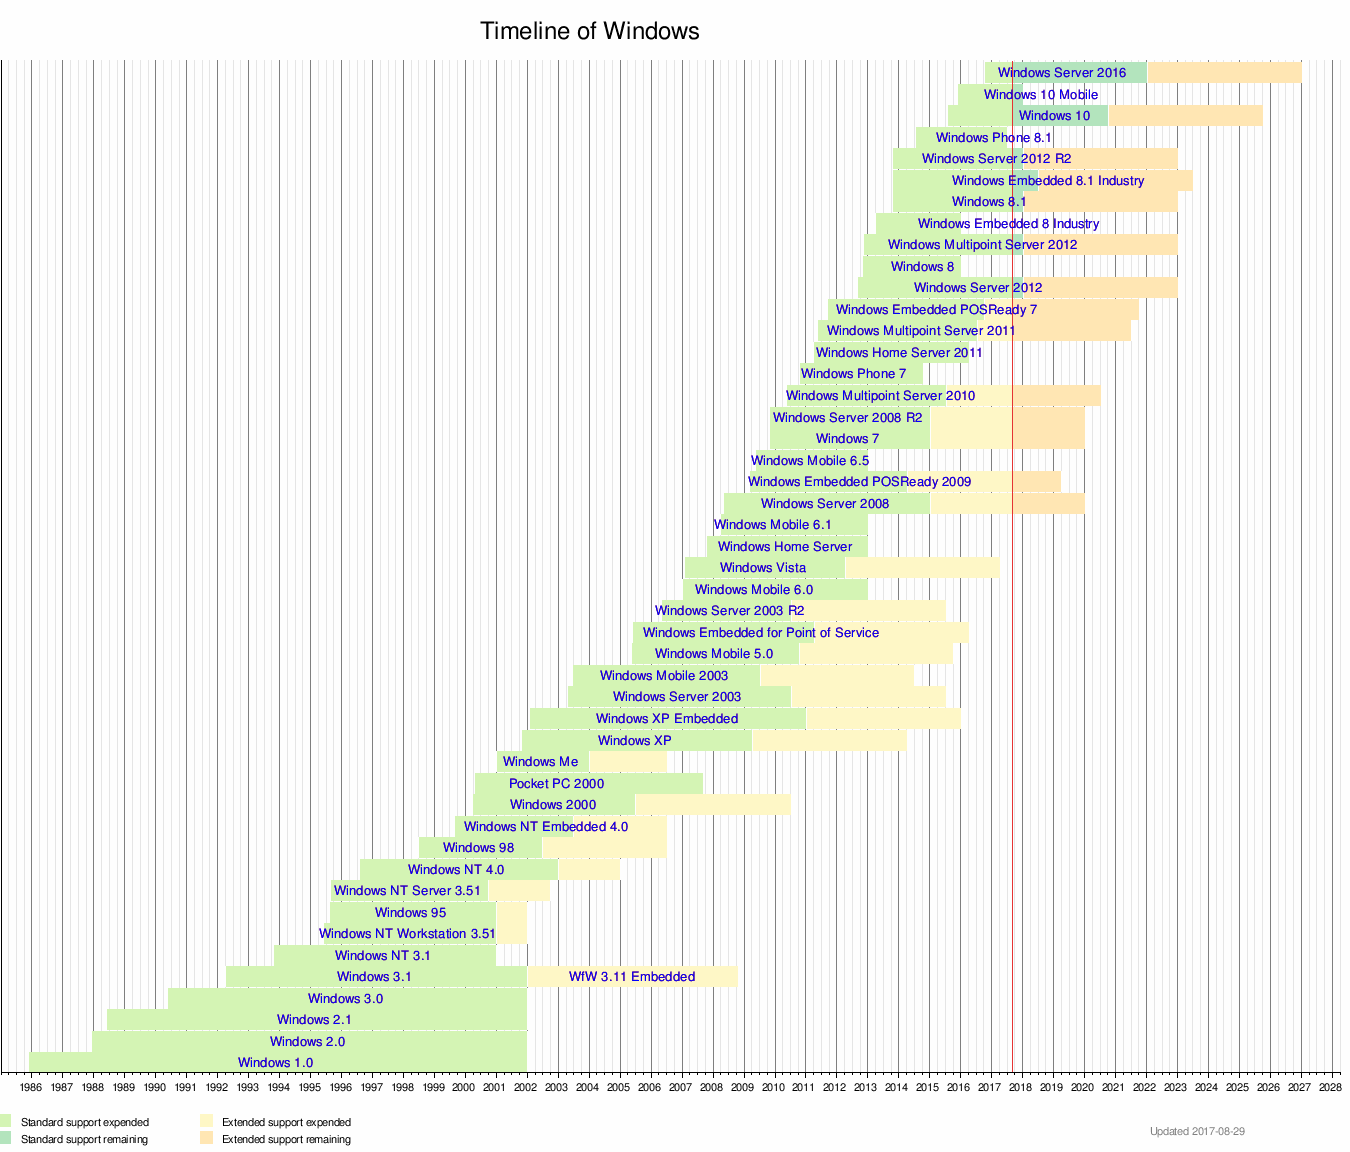 Timeline of Windows